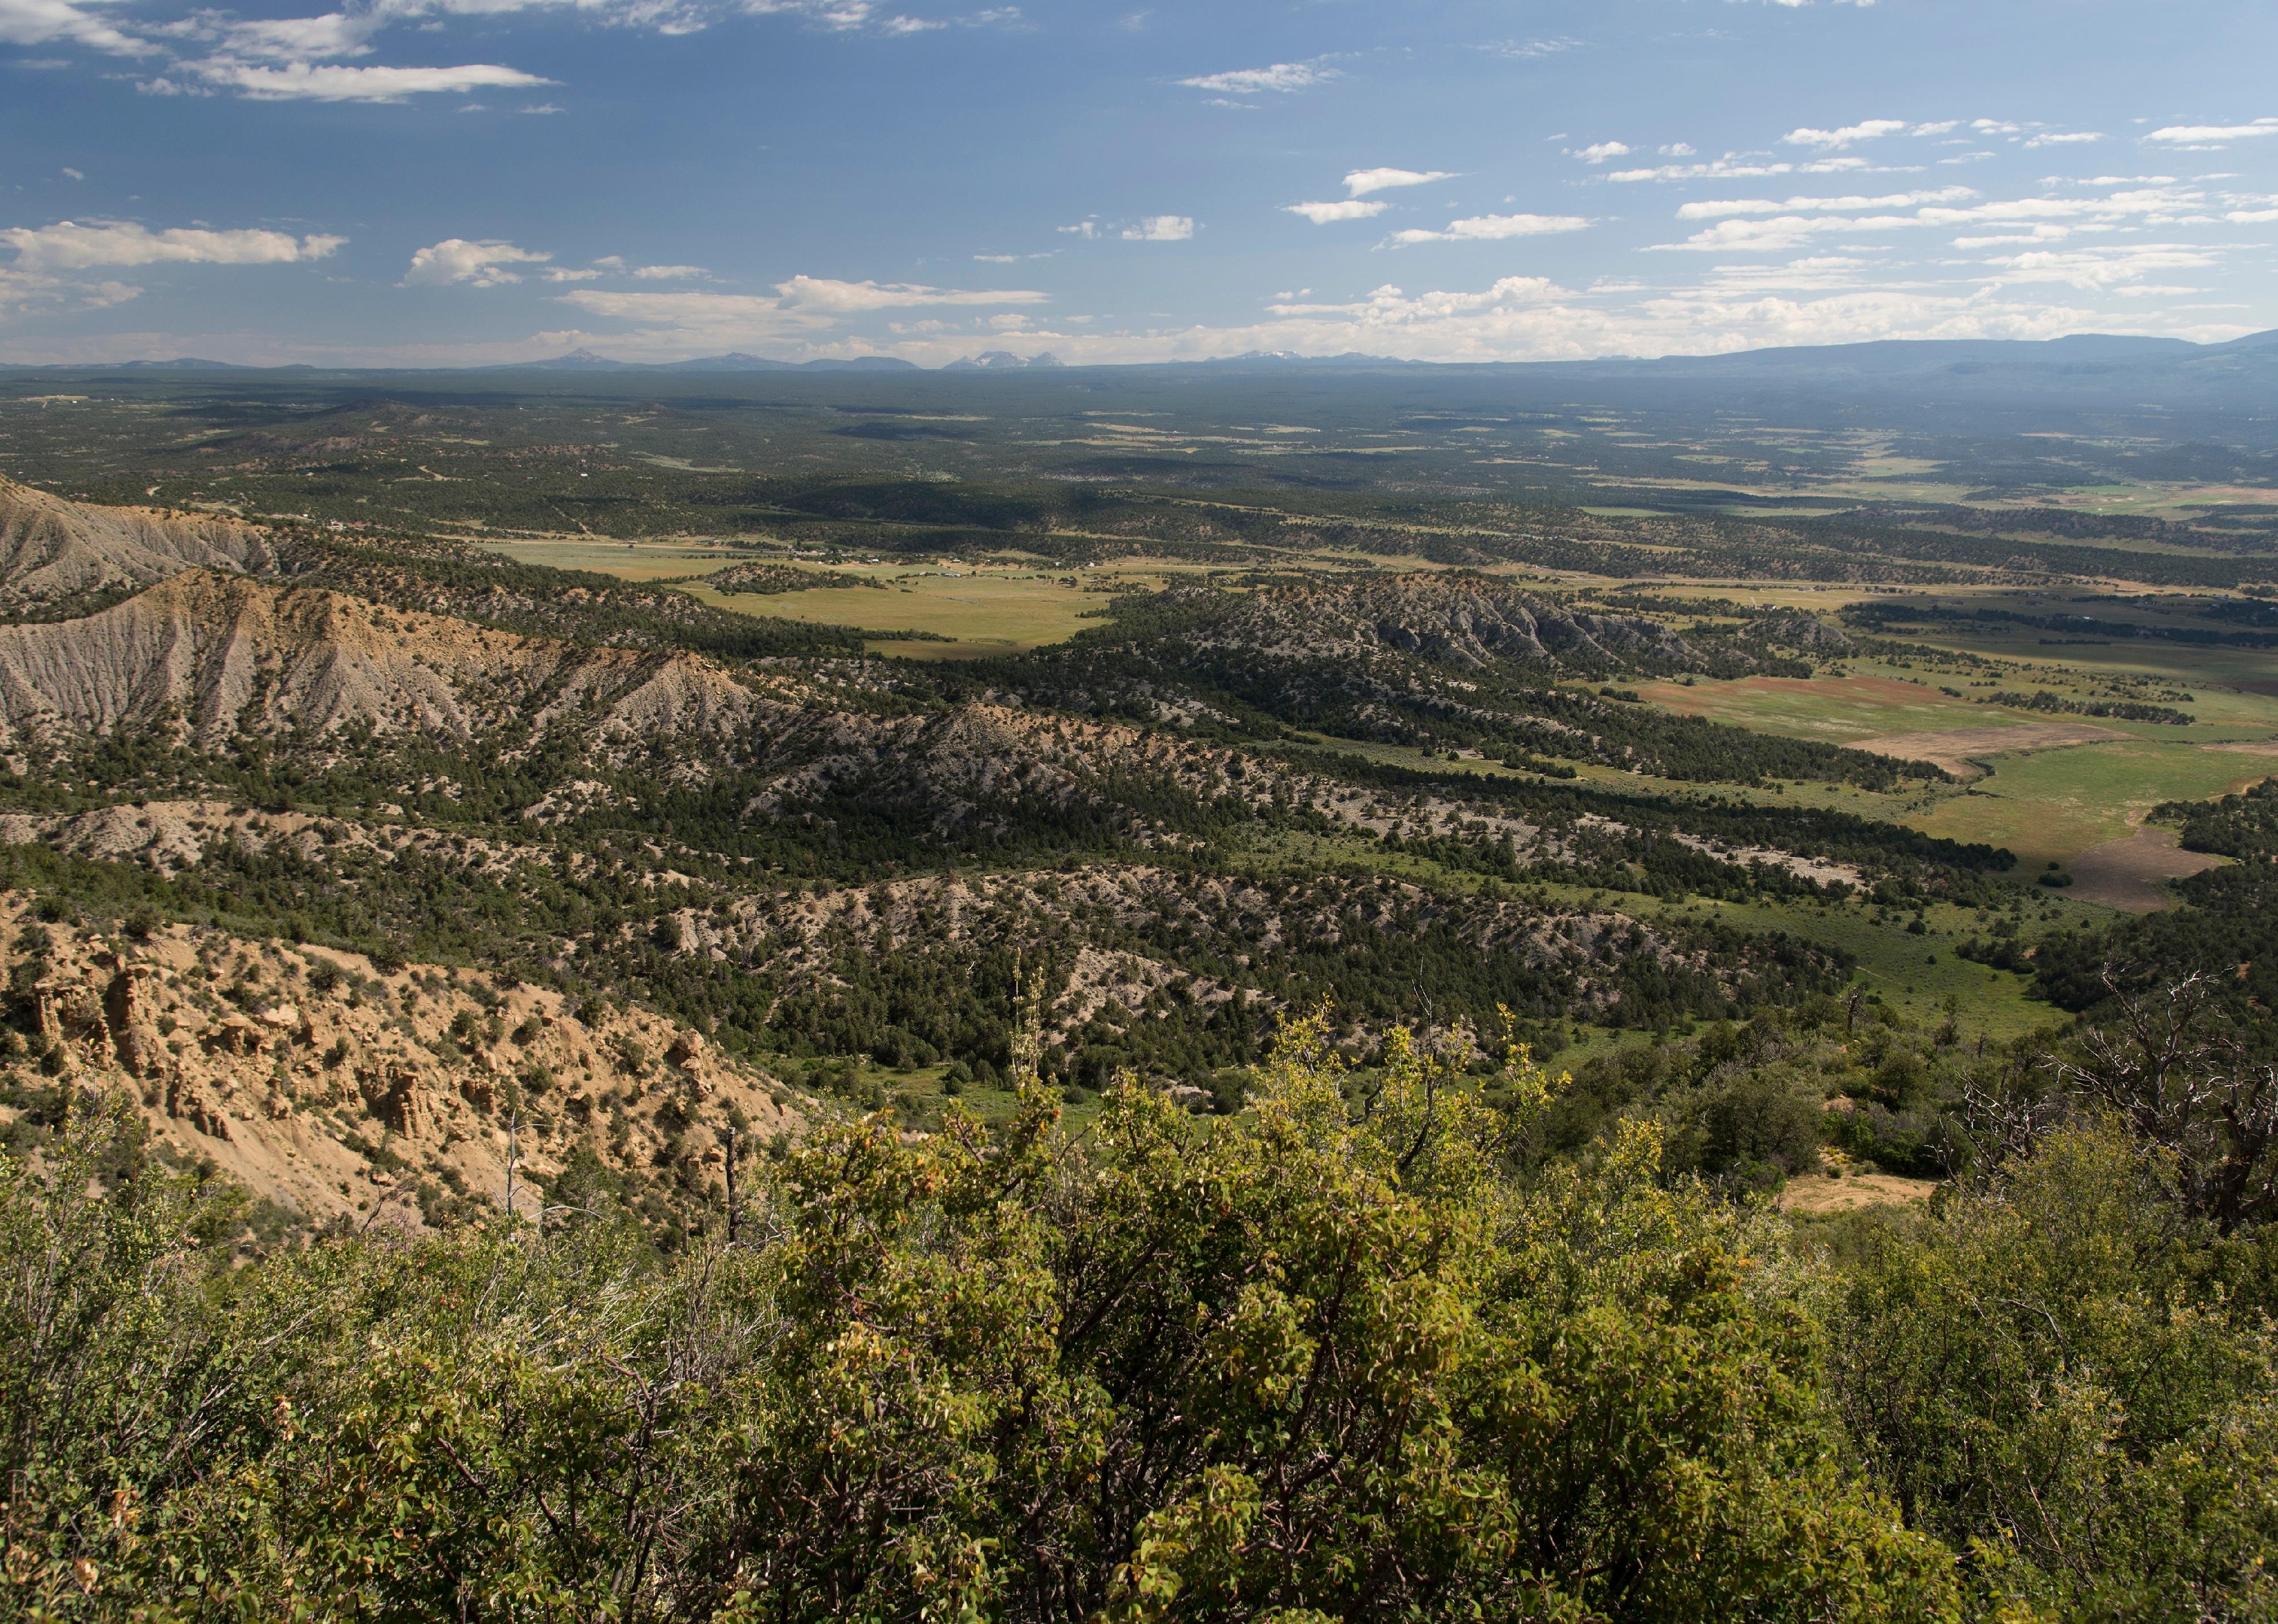 Mancos Valley Overlook in Mesa Verde National Park.